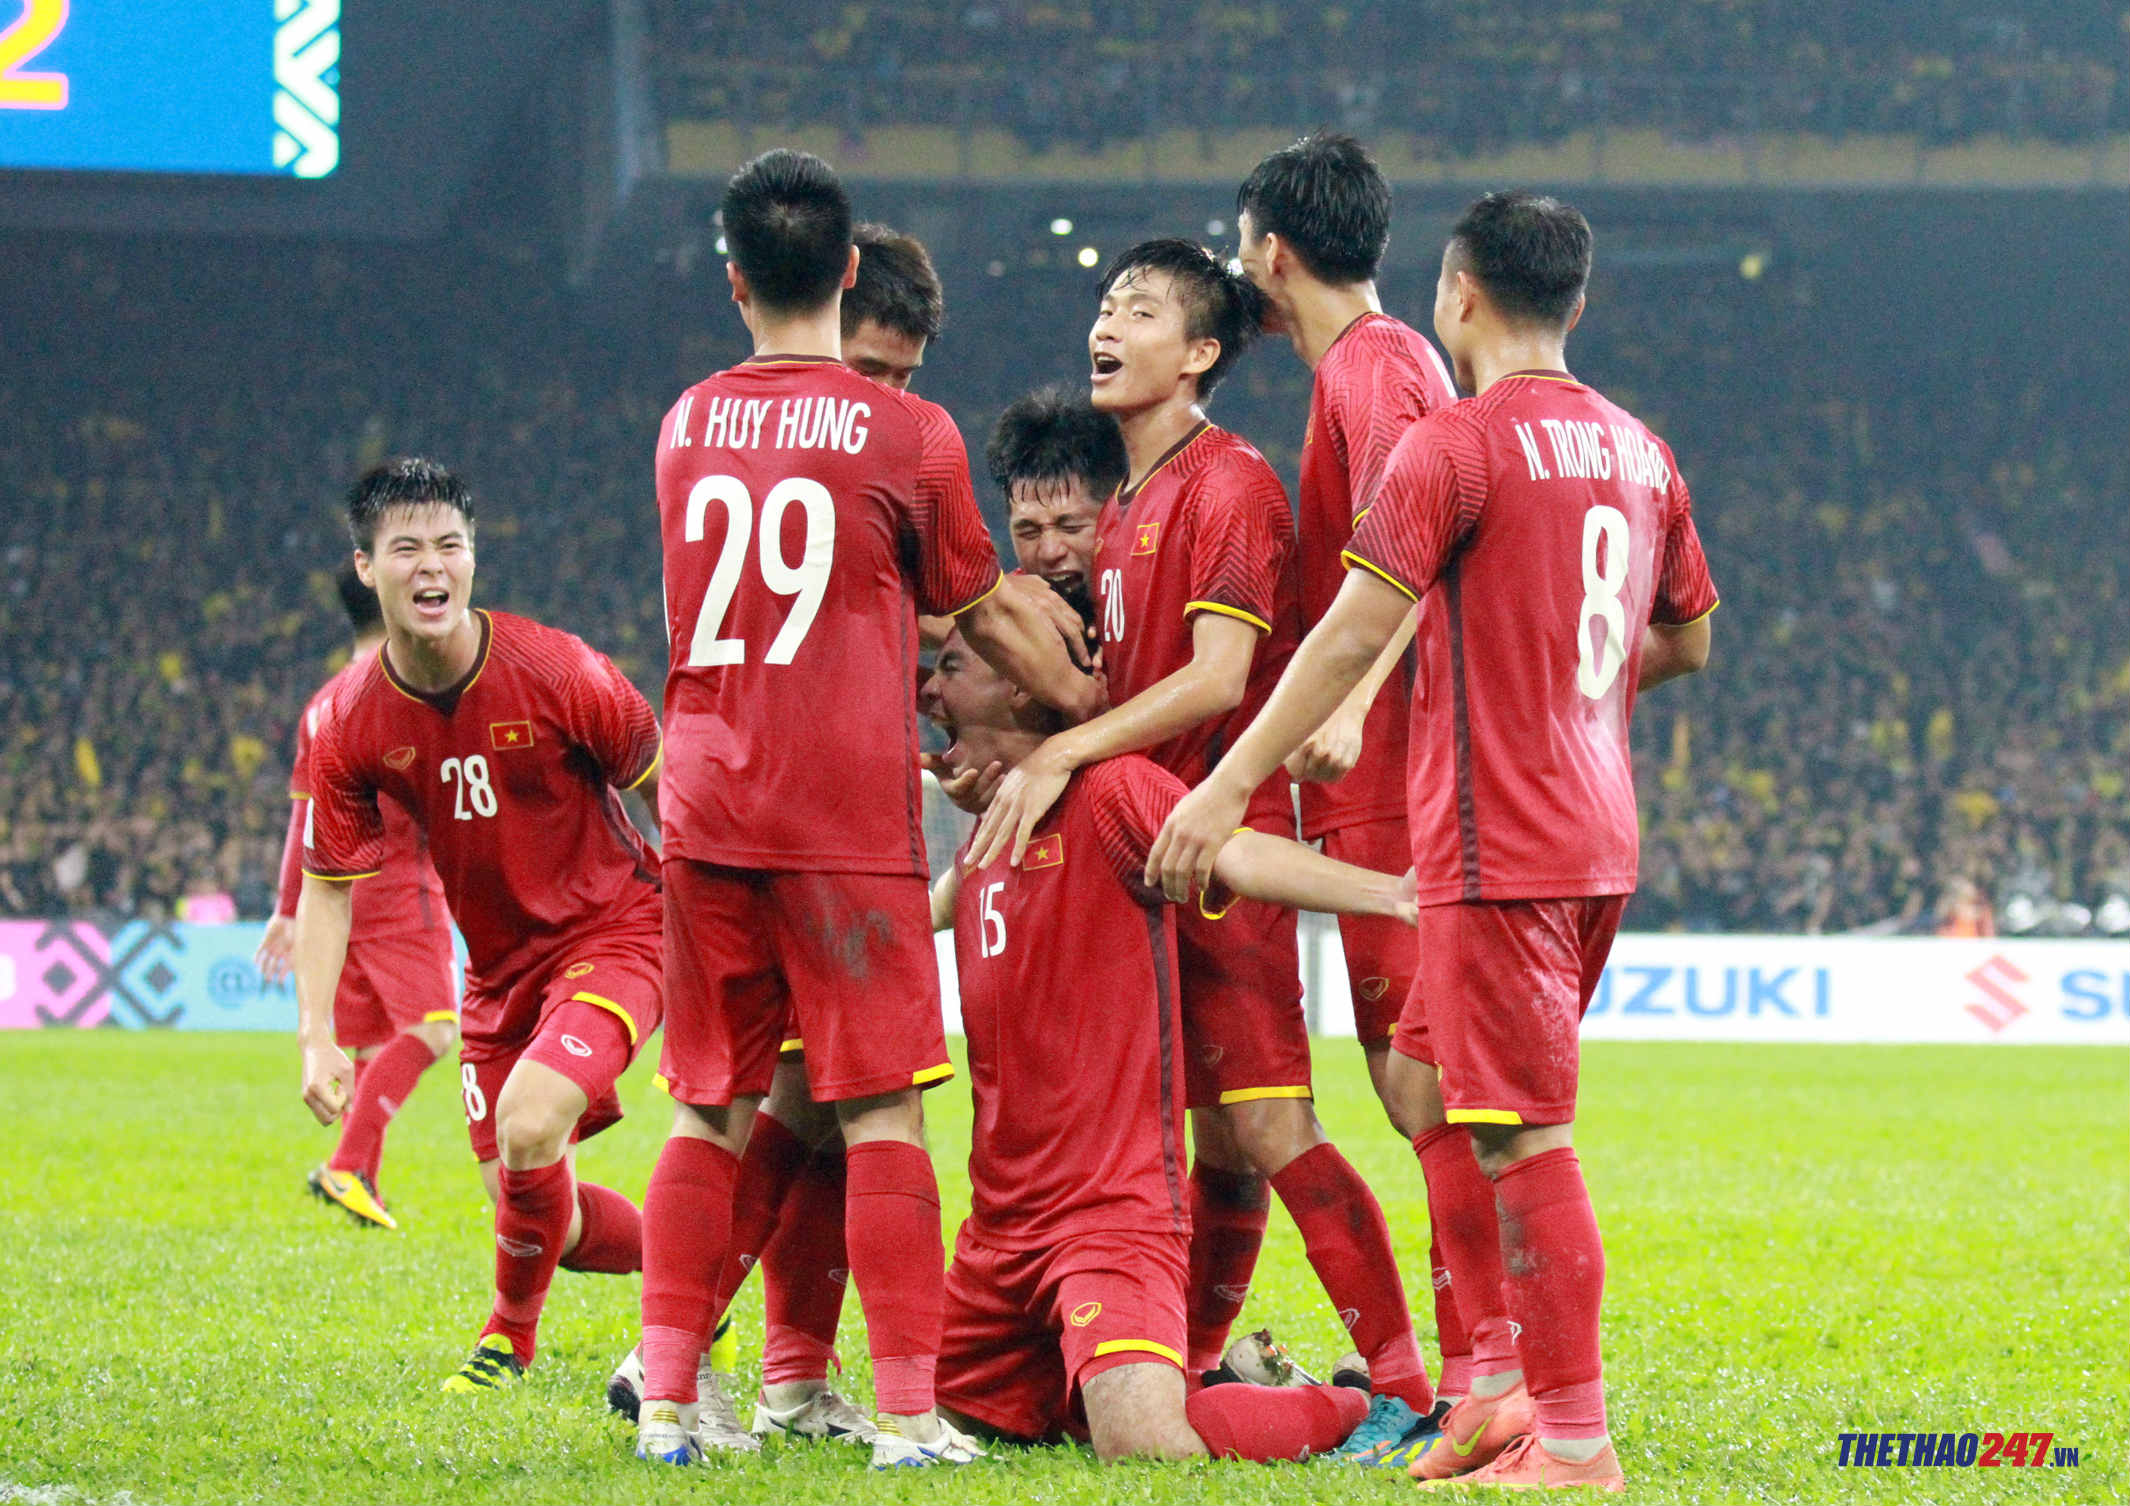 vietnam national team against Malaysia